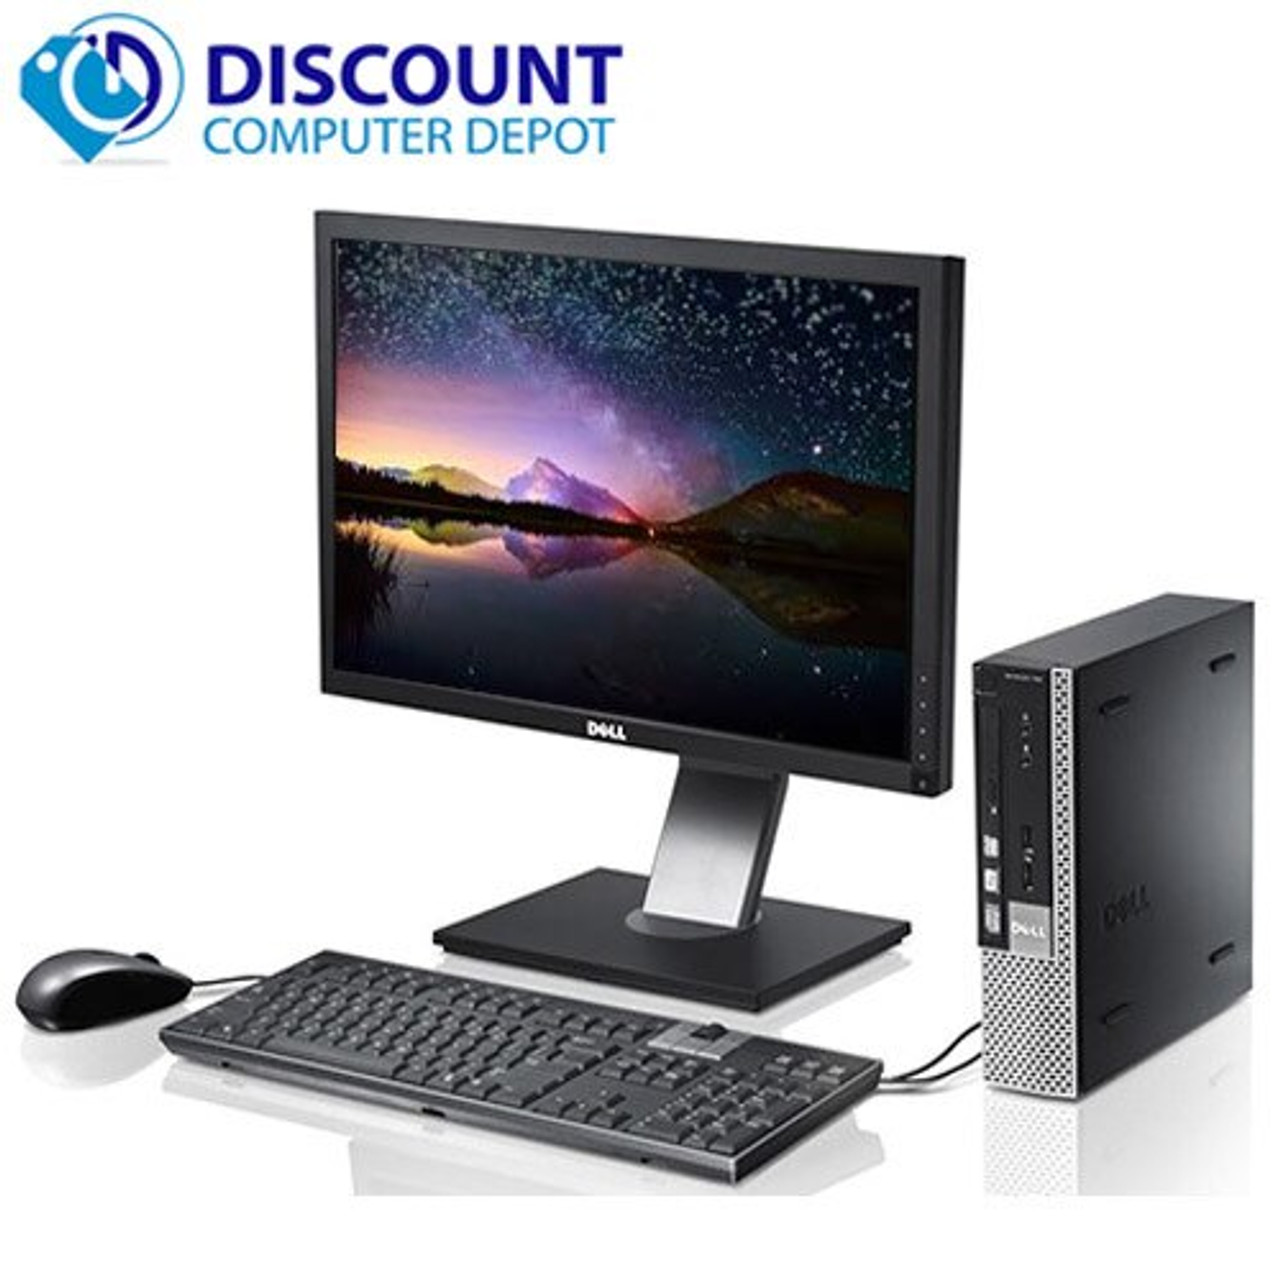 Fast And Dependable Dell Desktop, Intel Core i5 Processor, 8GB RAM, 128GB SSD, WIFI, Windows 10, With 22 Monitor